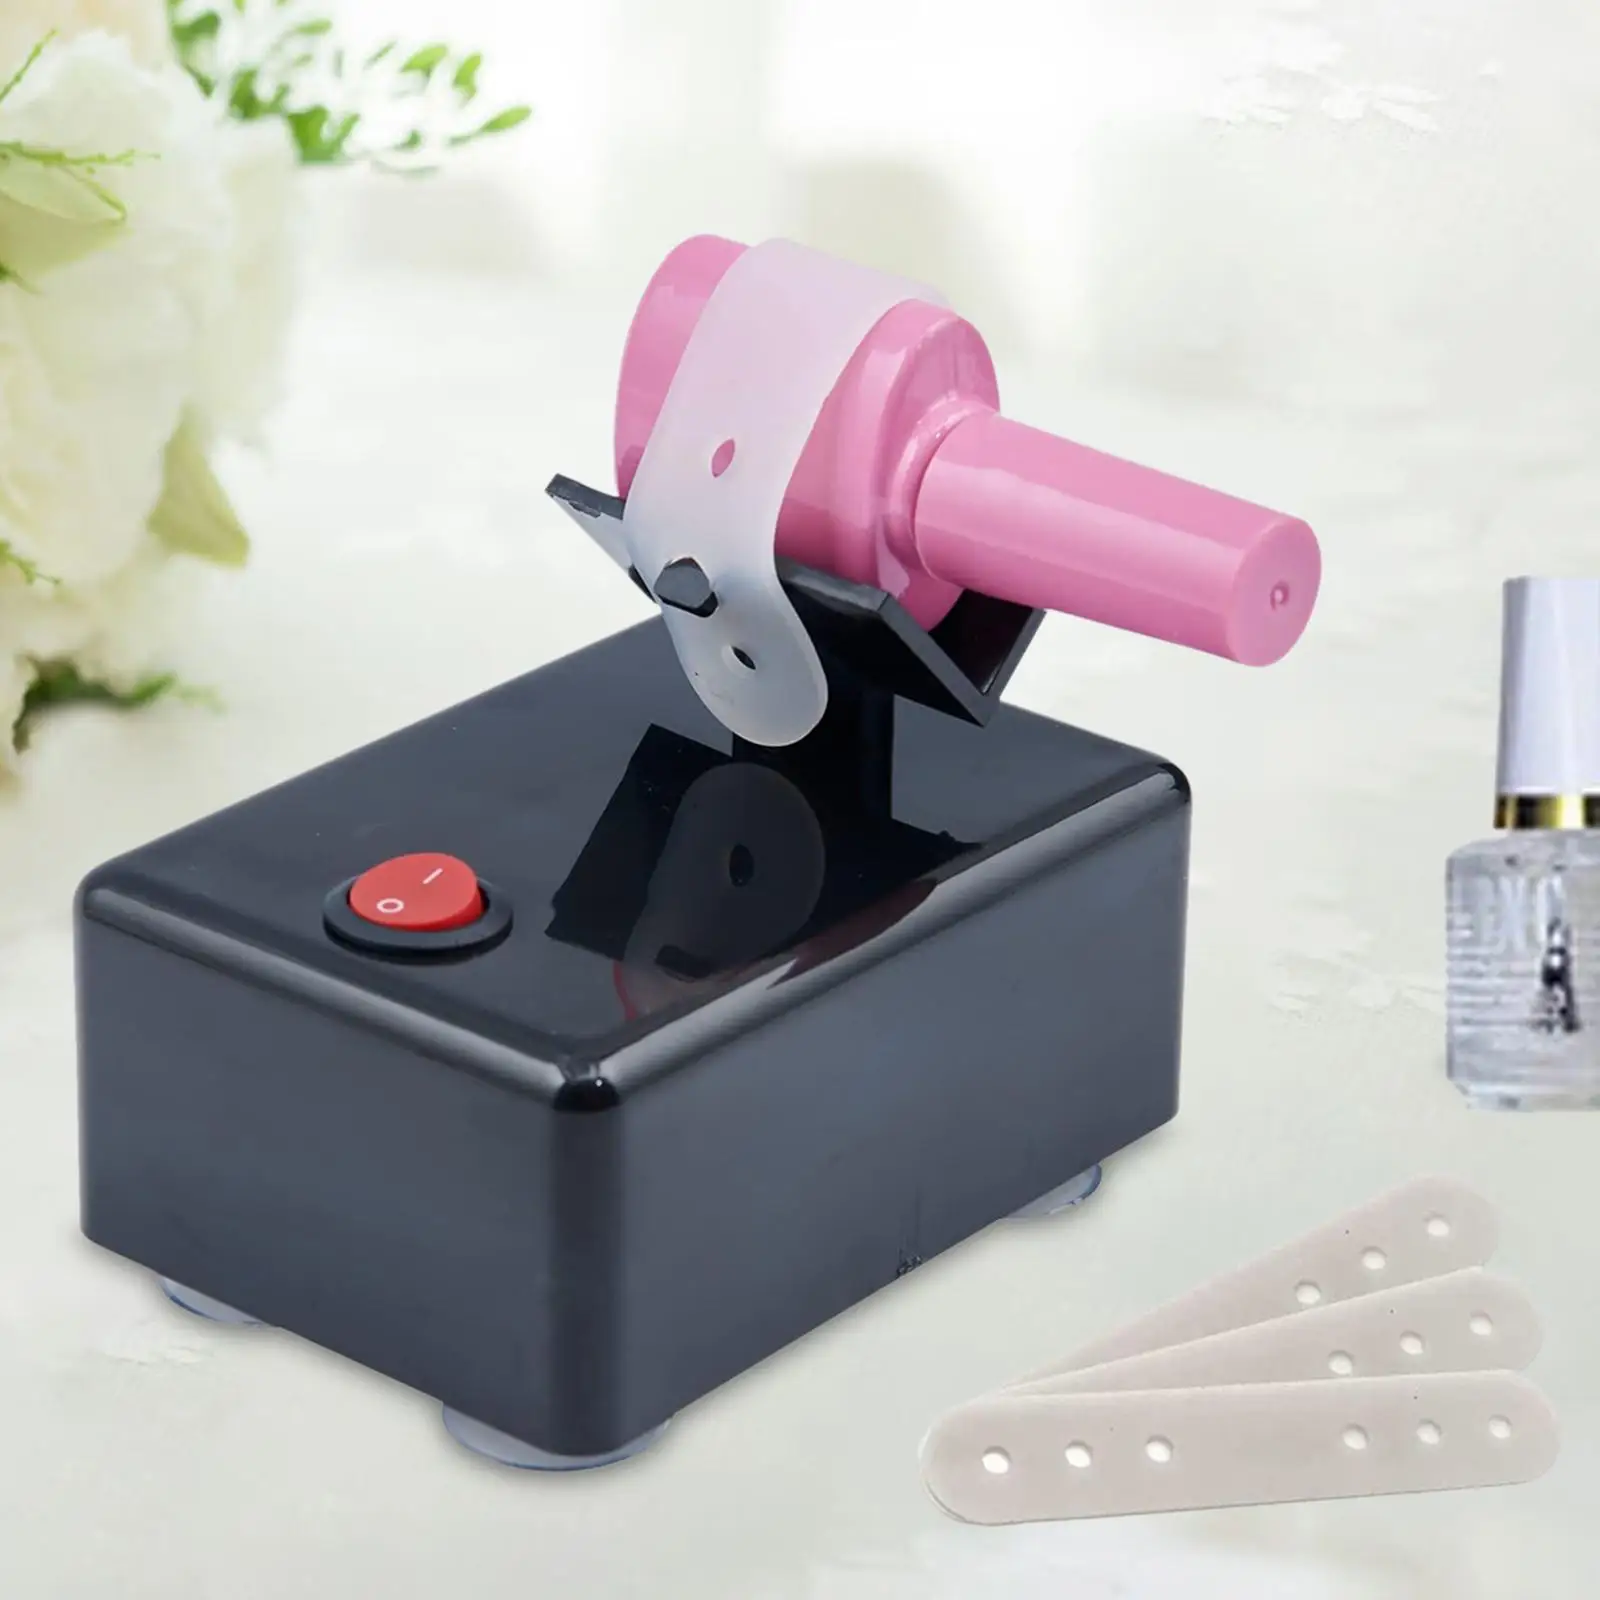 Portable Nail Polish Shaker Powerful Stirrer Liquid Mixer Easy to Use Durable for Makeup Eyelash Adhesives Ink Manicurist Salons